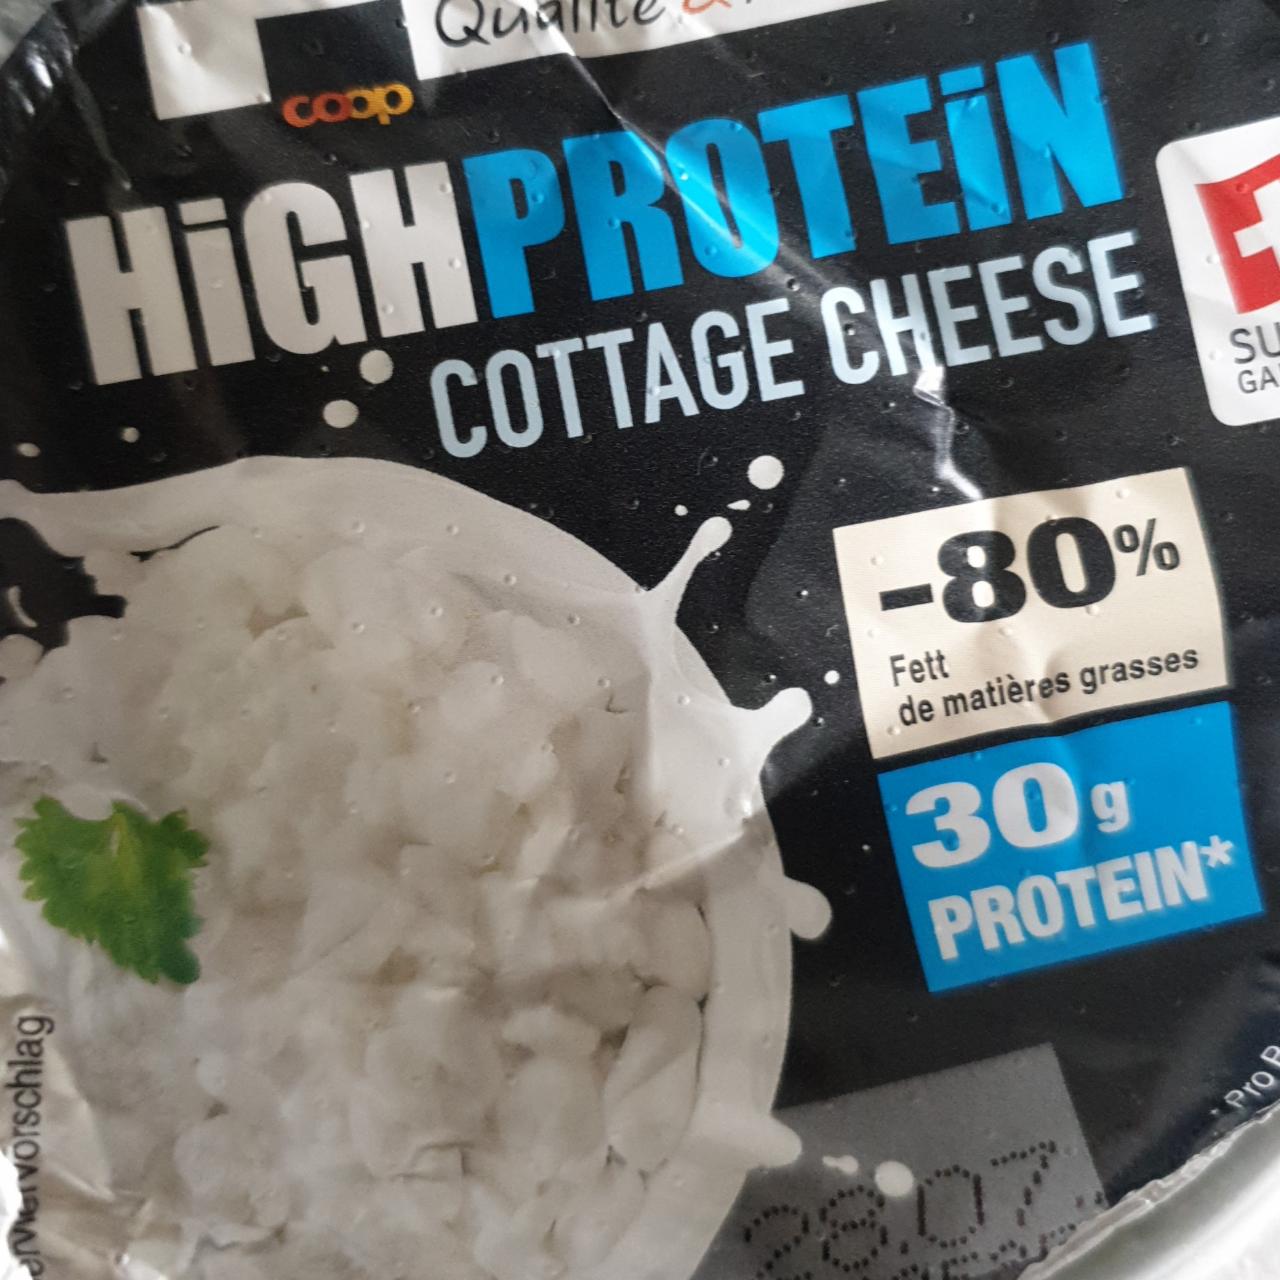 Fotografie - High protein cottage cheese Coop Qualité & Prix